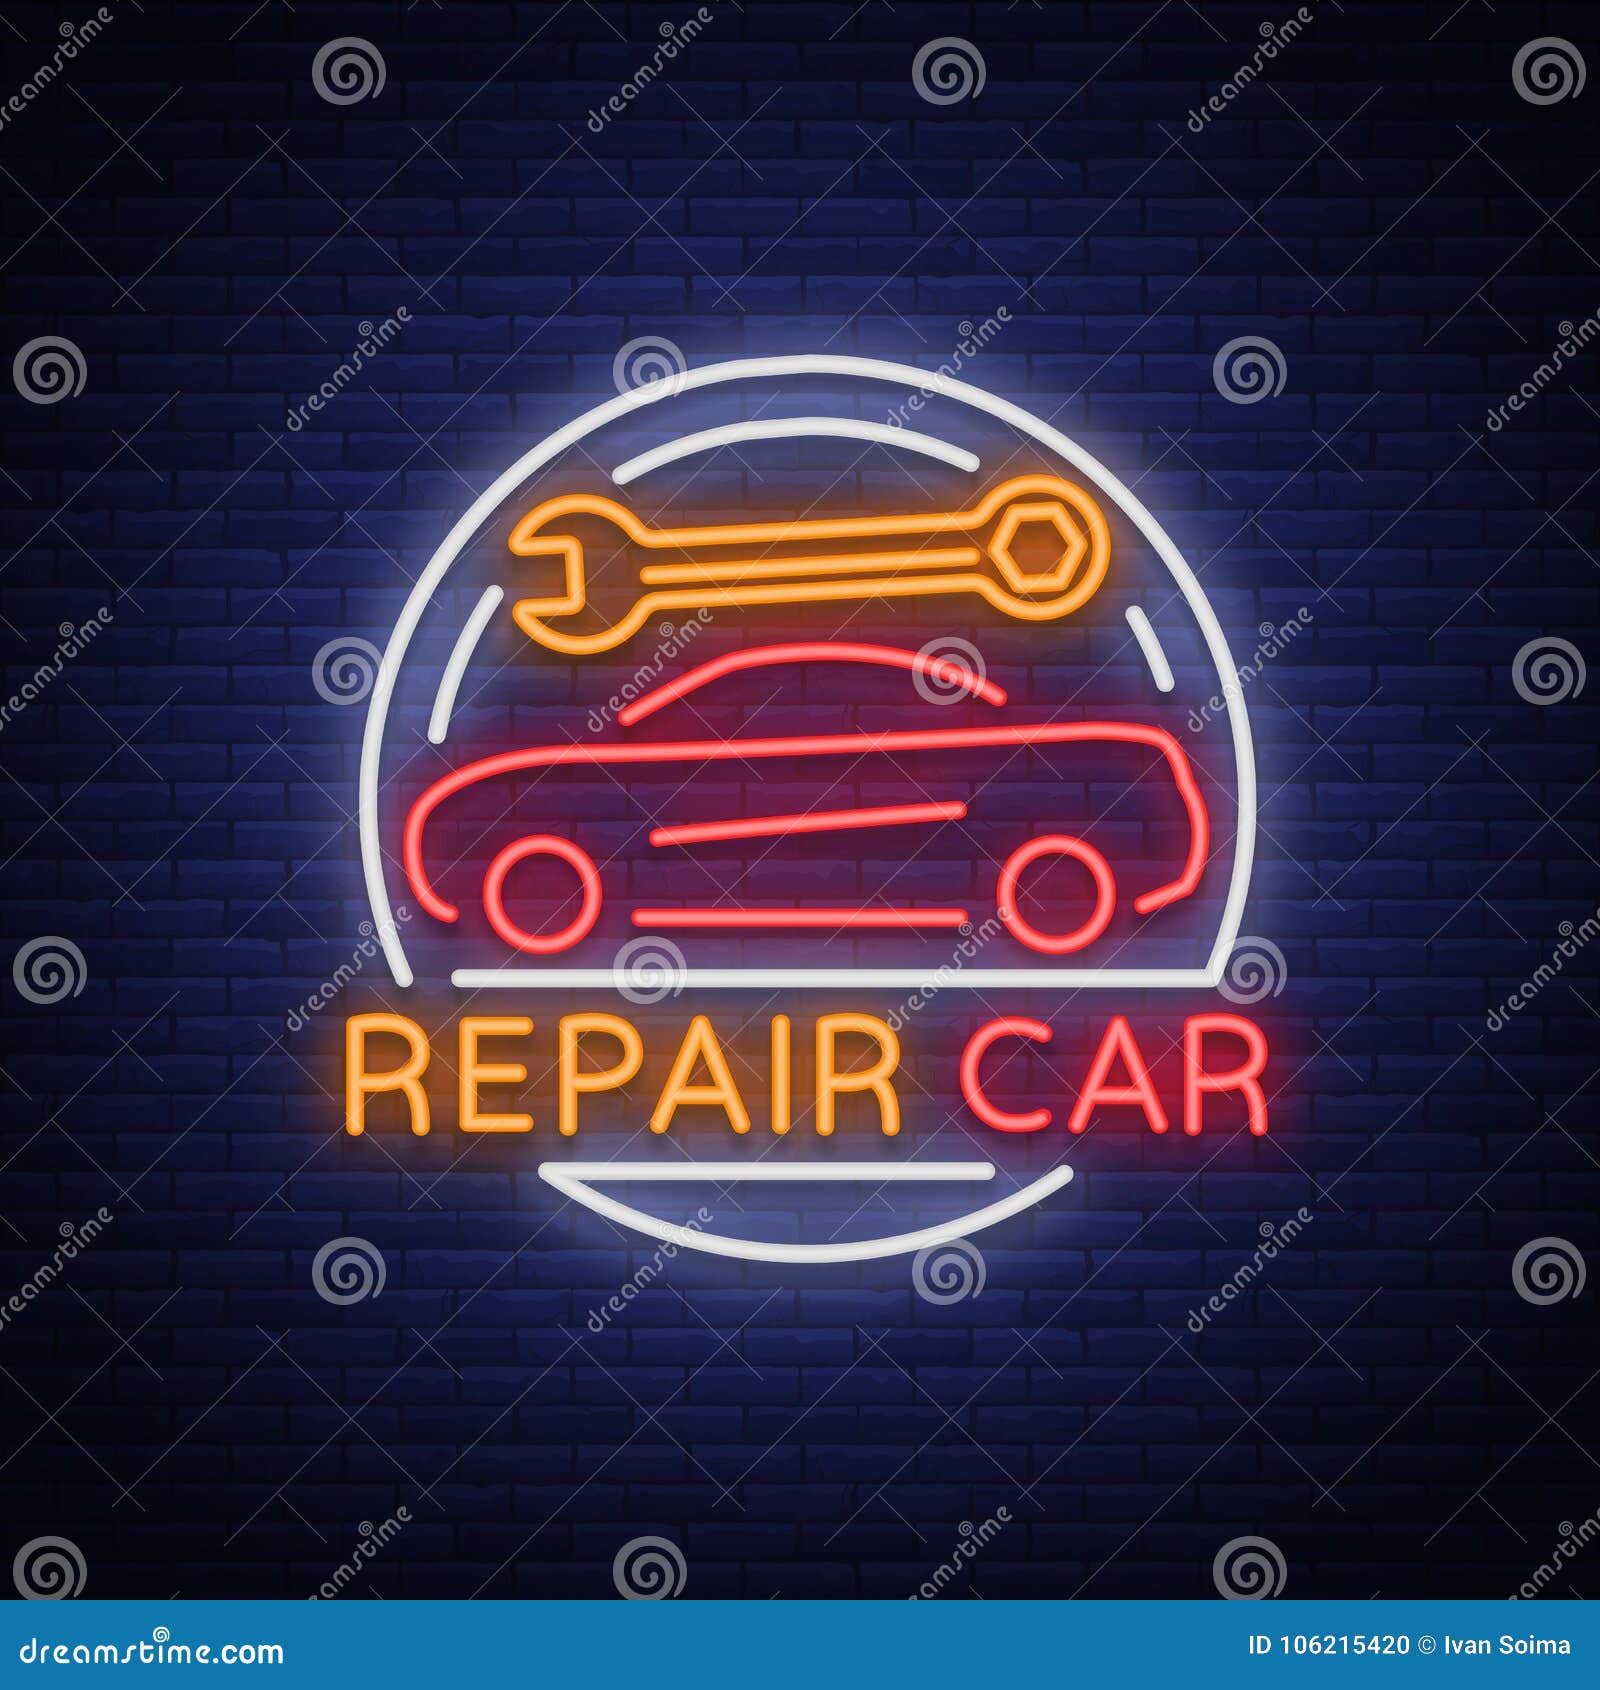 Glasurit Auto Body Garage Service Hub Bar Shop Advertising Neon Sign